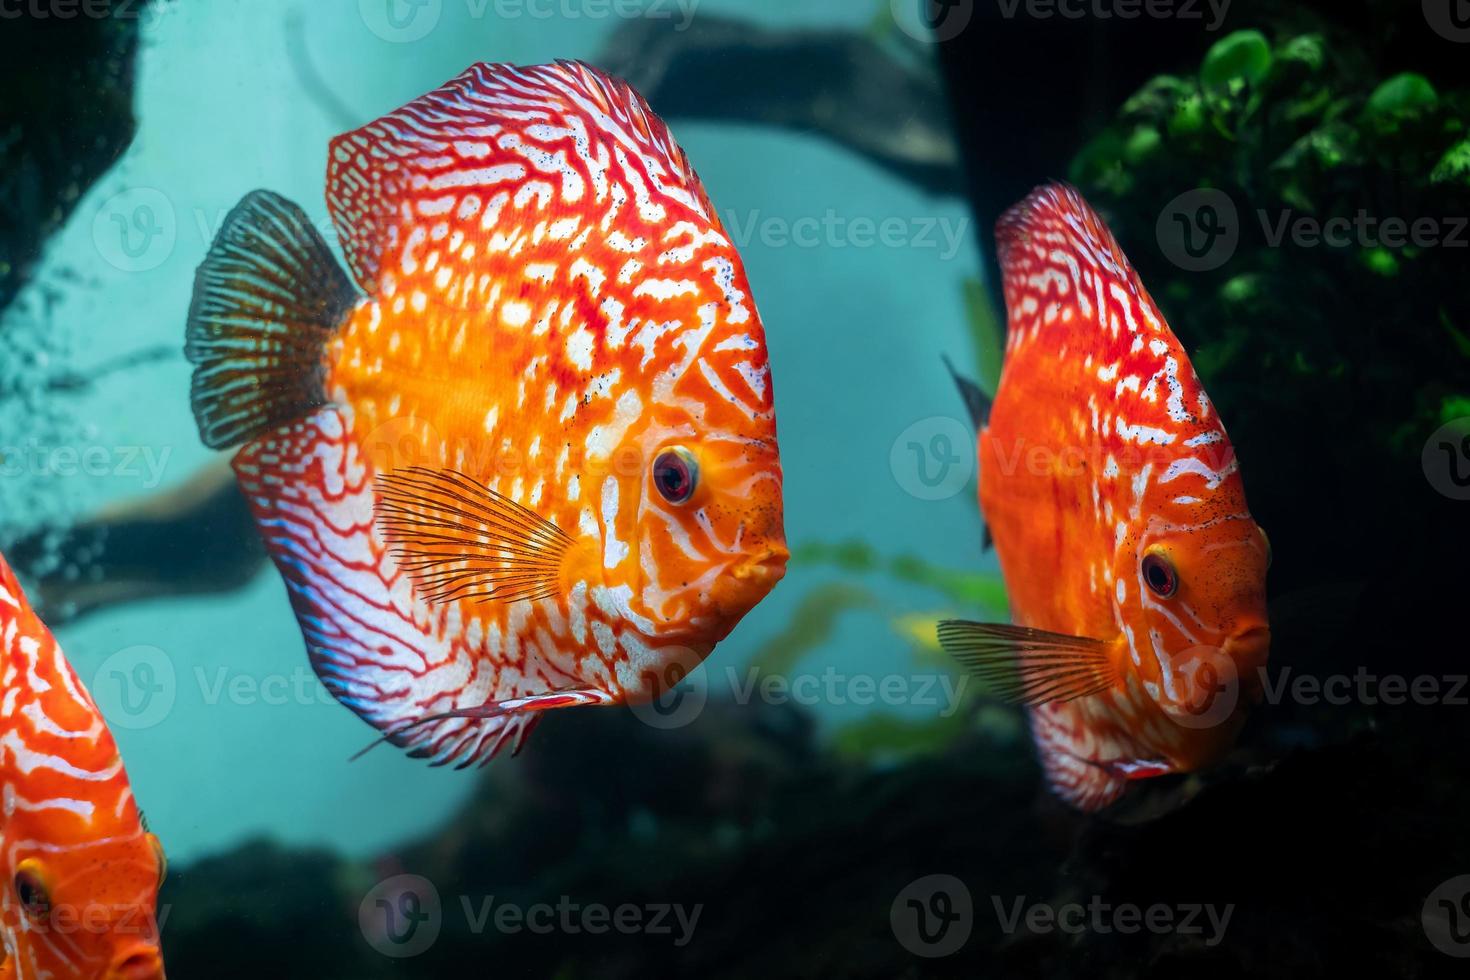 kleurrijke discus, pompadour vissen zwemmen in aquarium. symphysodon aequifasciatus is Amerikaanse cichliden afkomstig uit de Amazone-rivier, Zuid-Amerika, populair als zoetwateraquariumvissen. foto